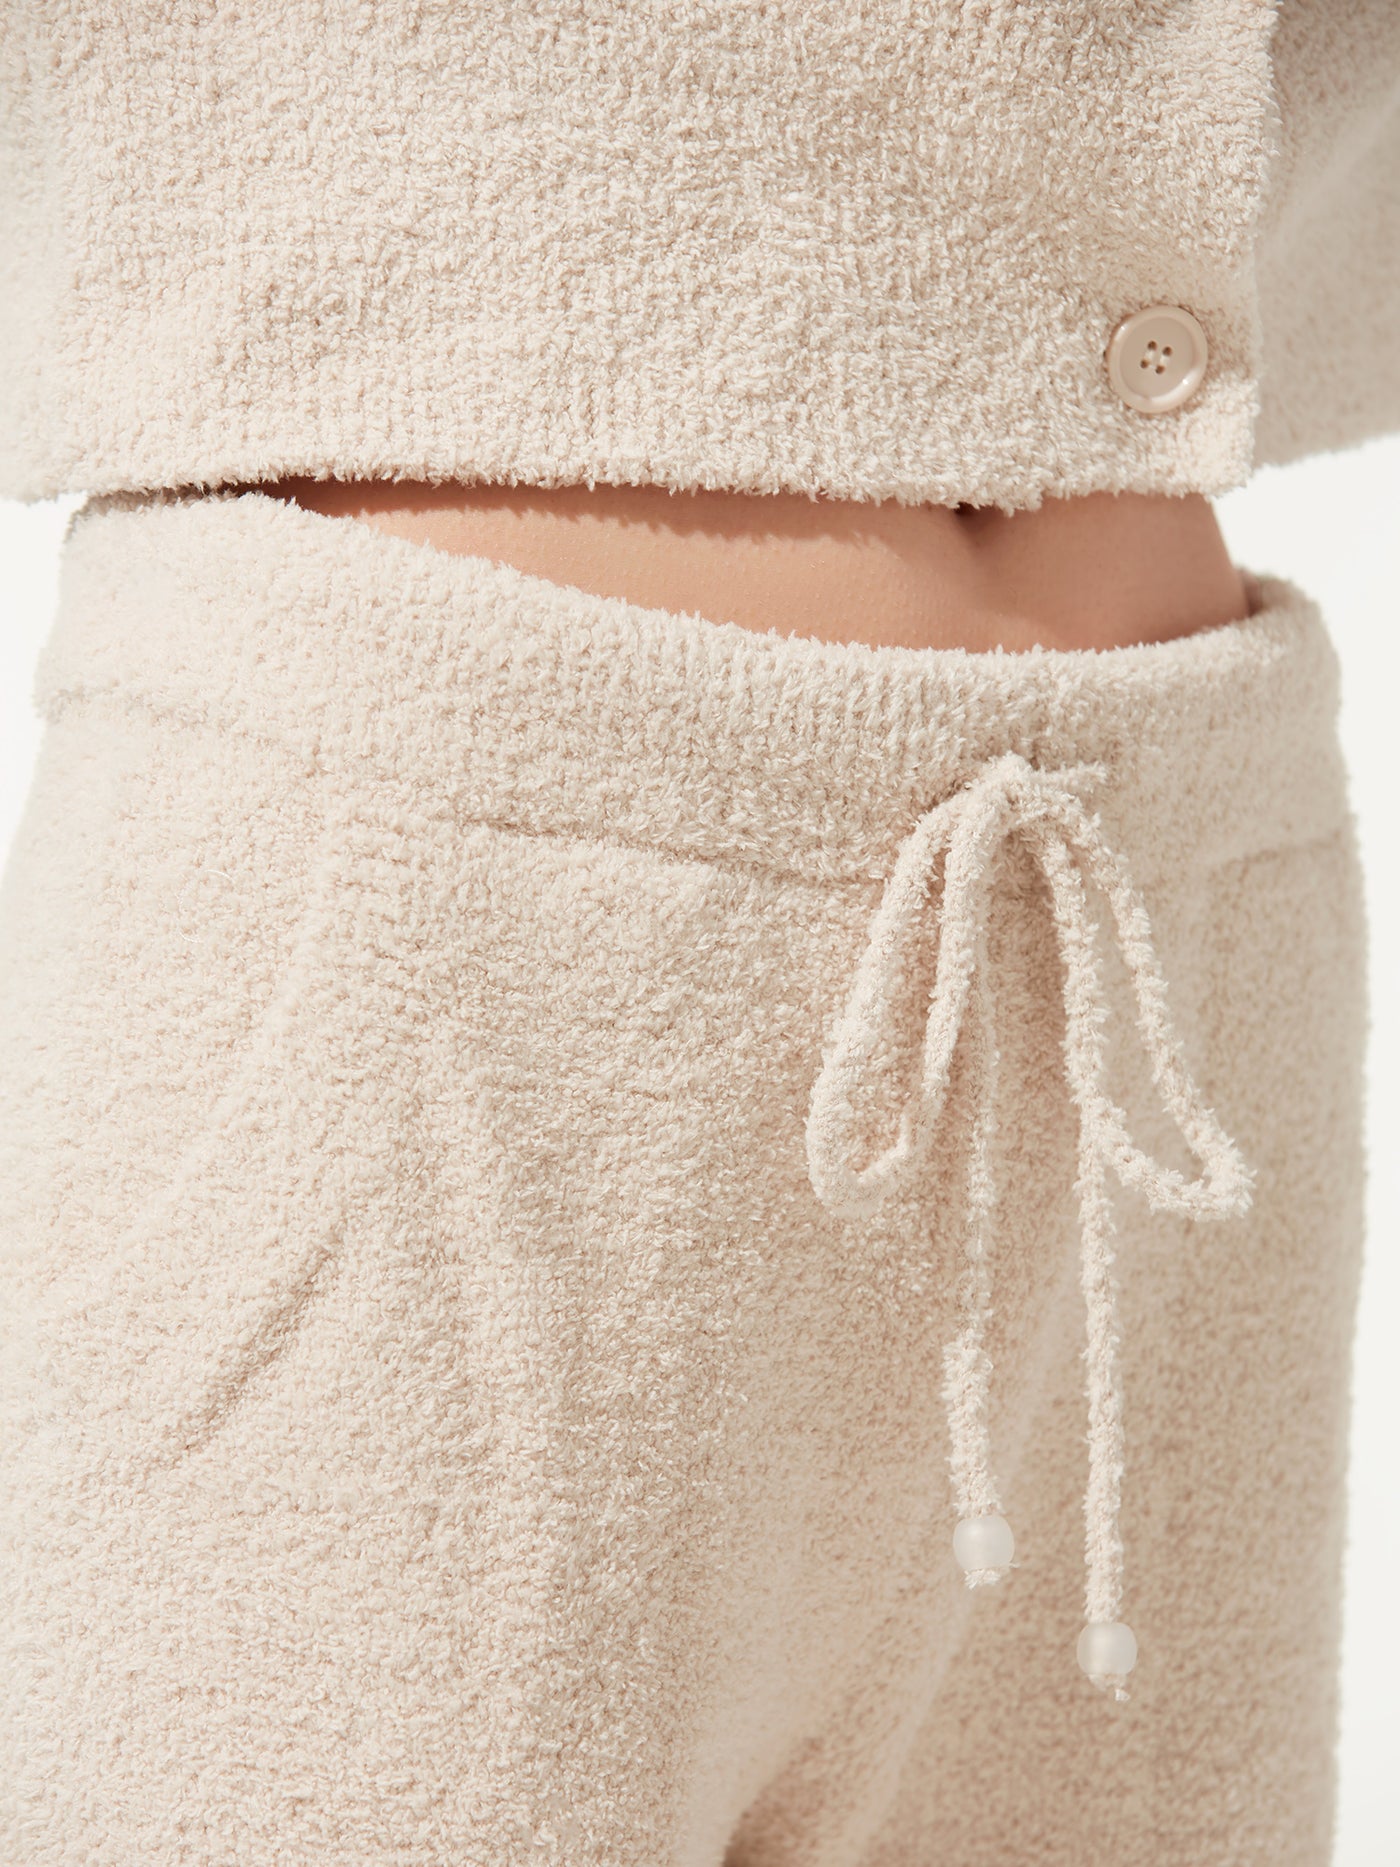 Mousse Stripe Half Velvet Cardigan Pajama Set